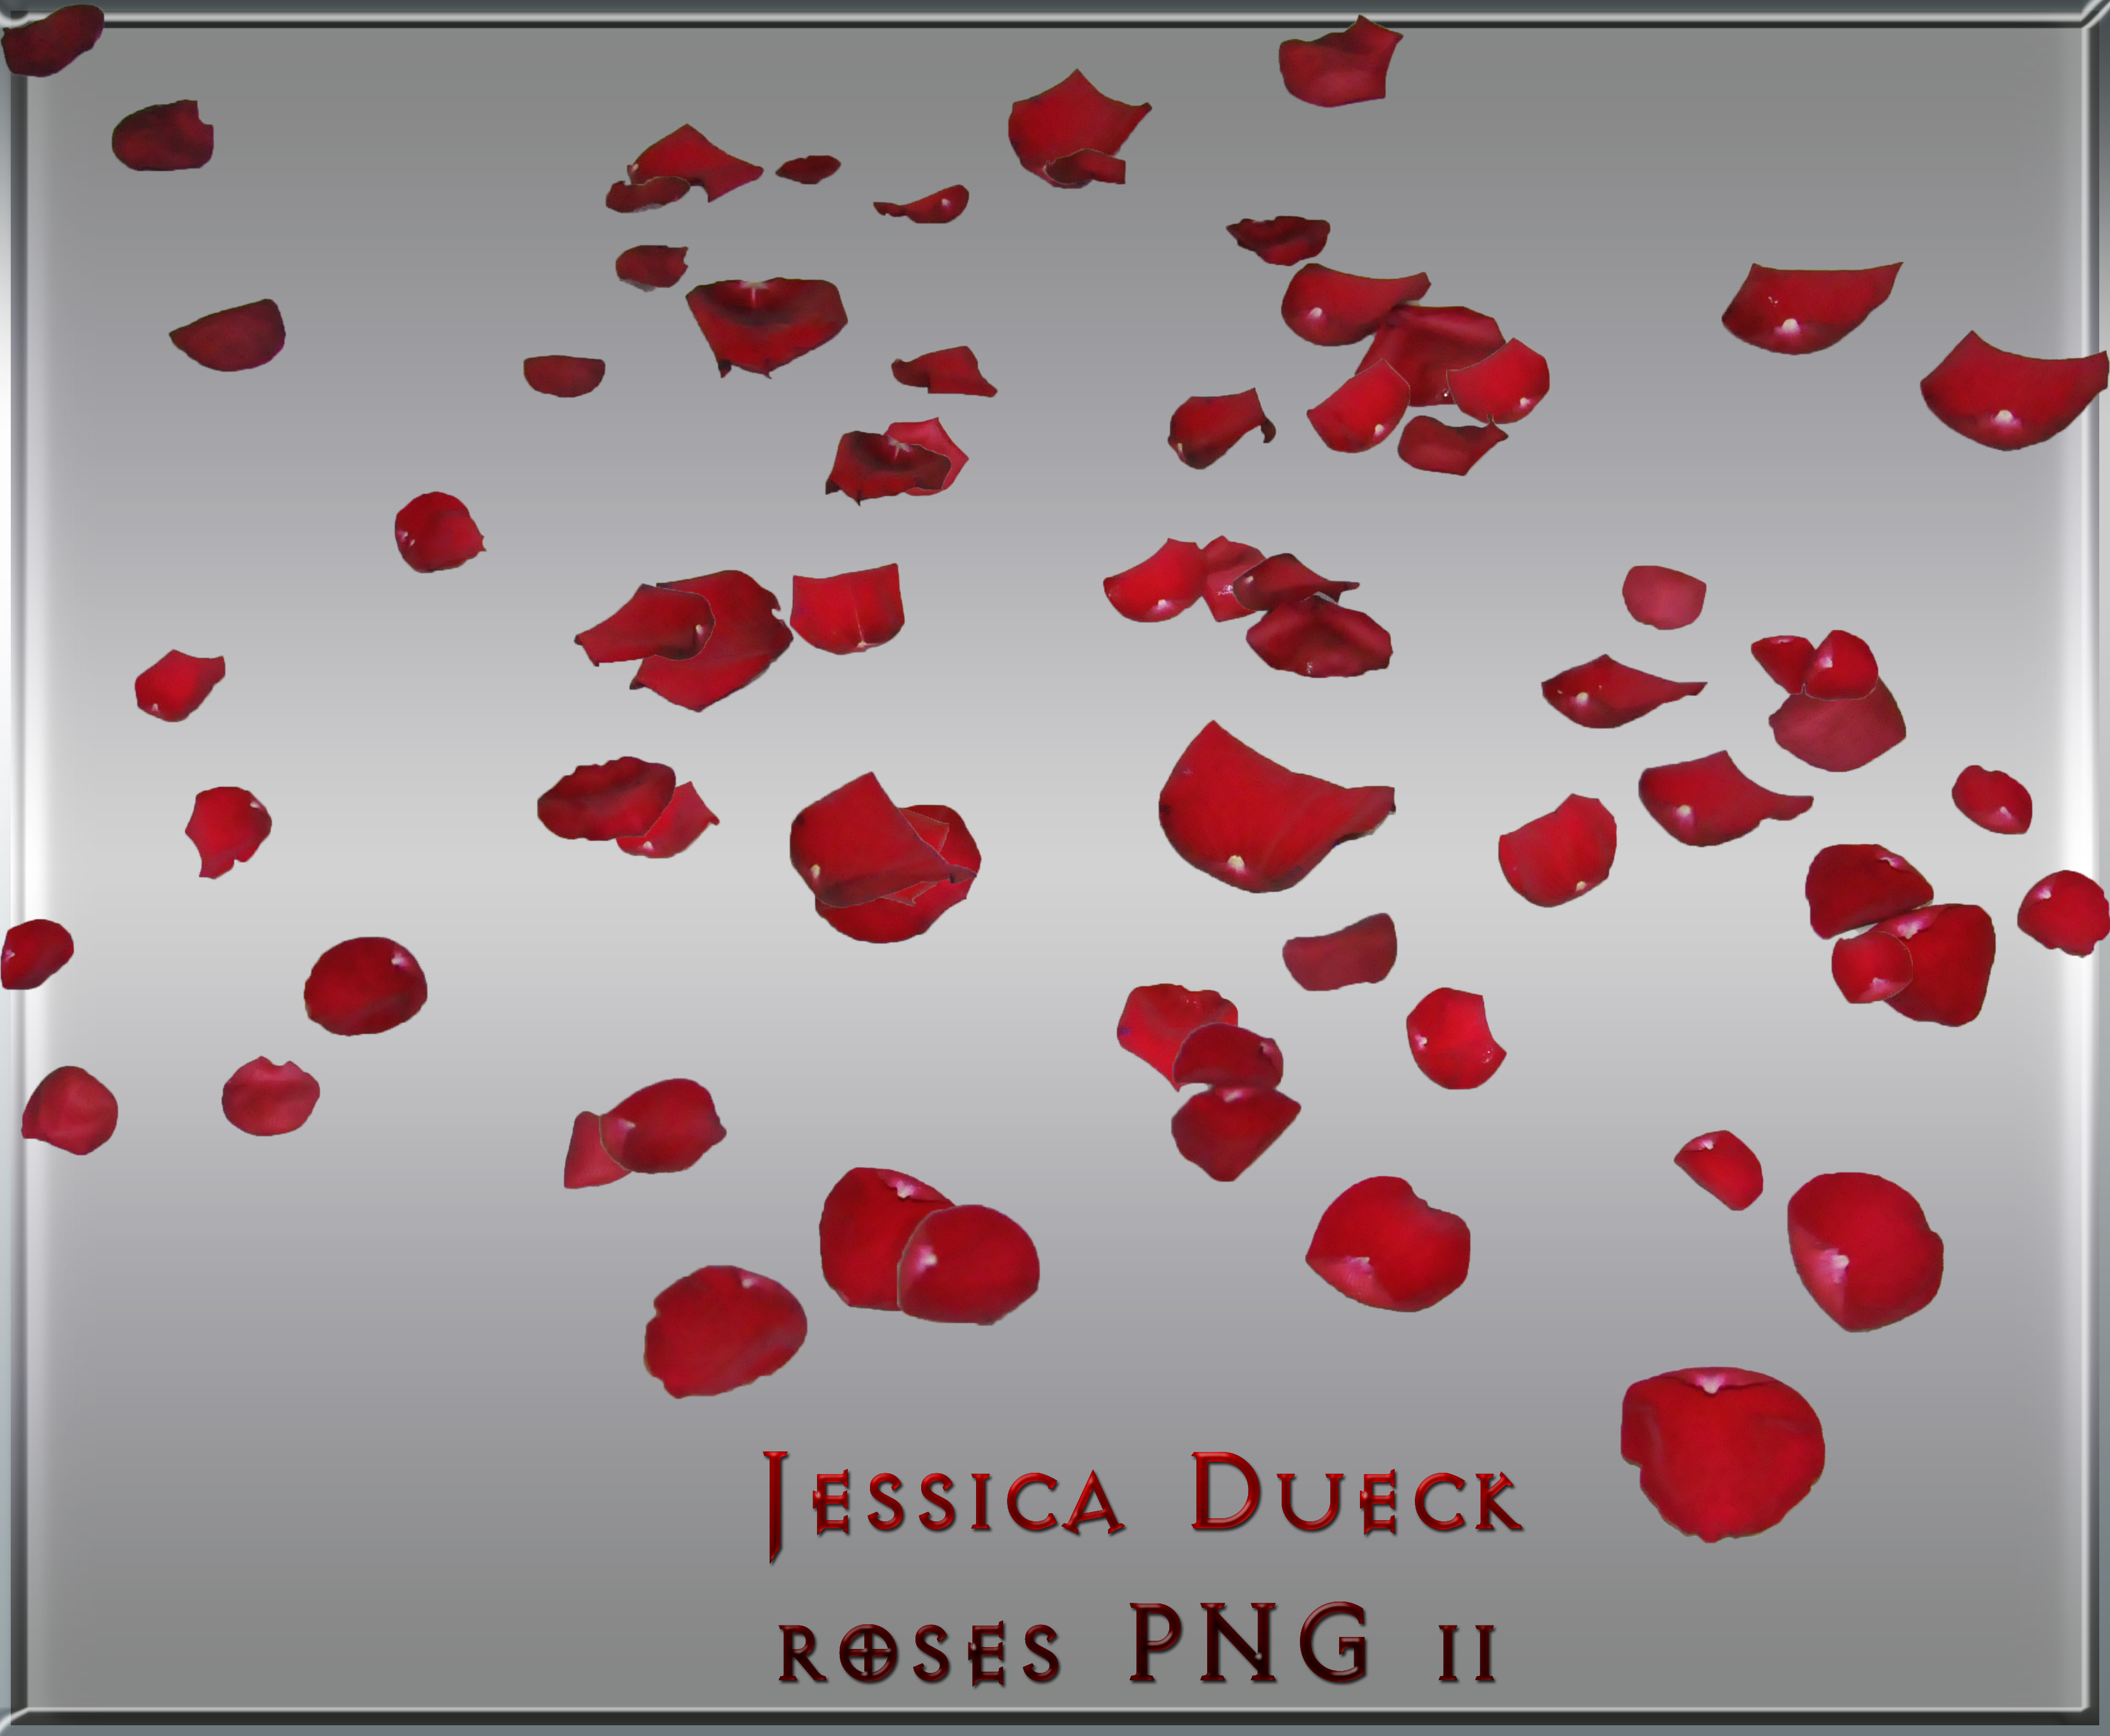 Red rose petals II